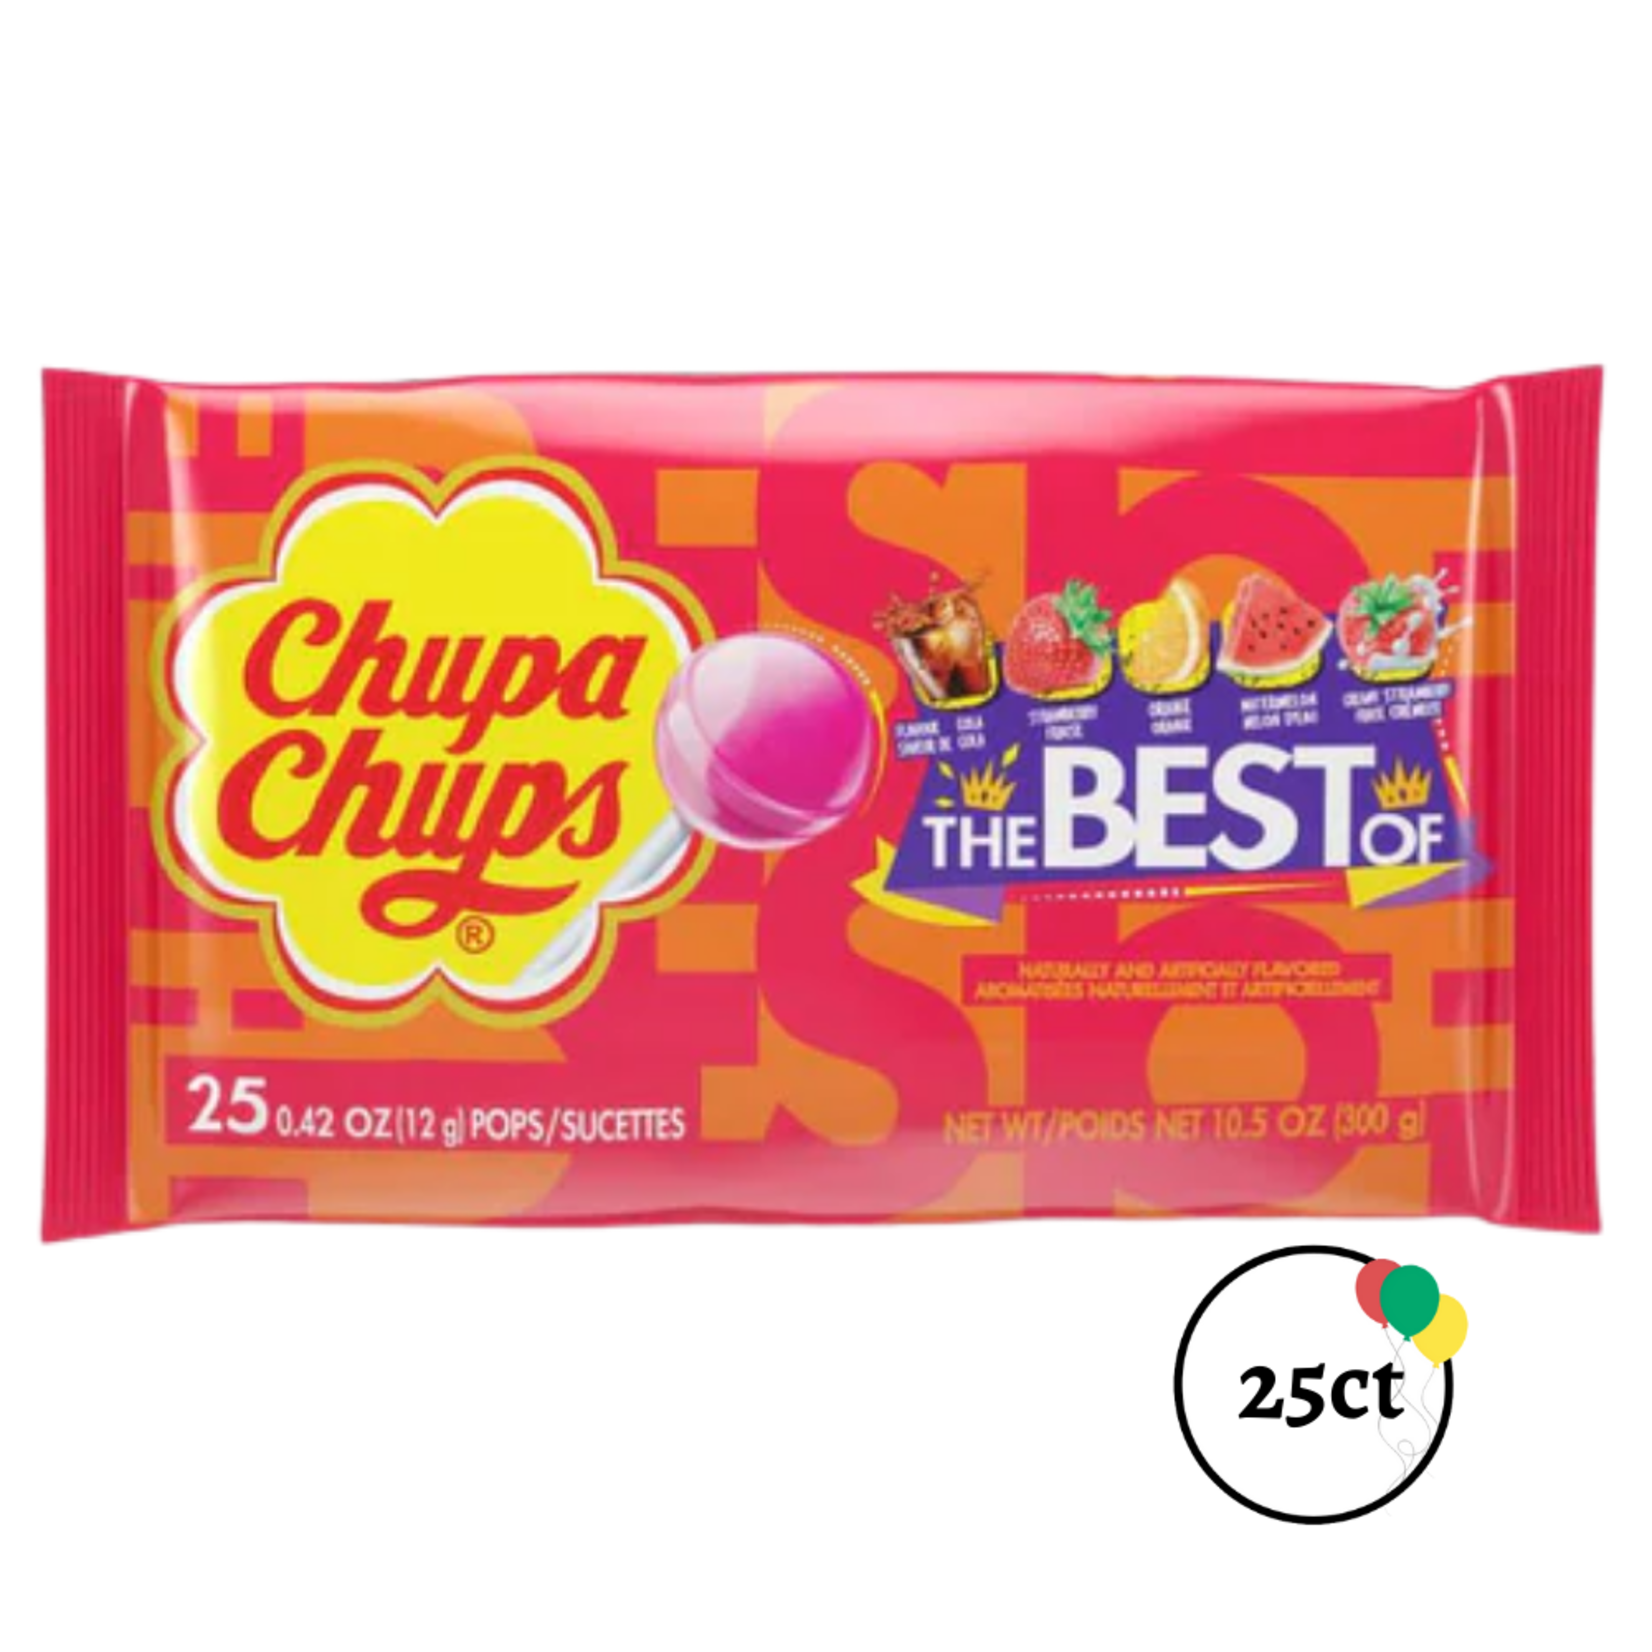 Chupa Chups The Best of Chupa Chups 25ct